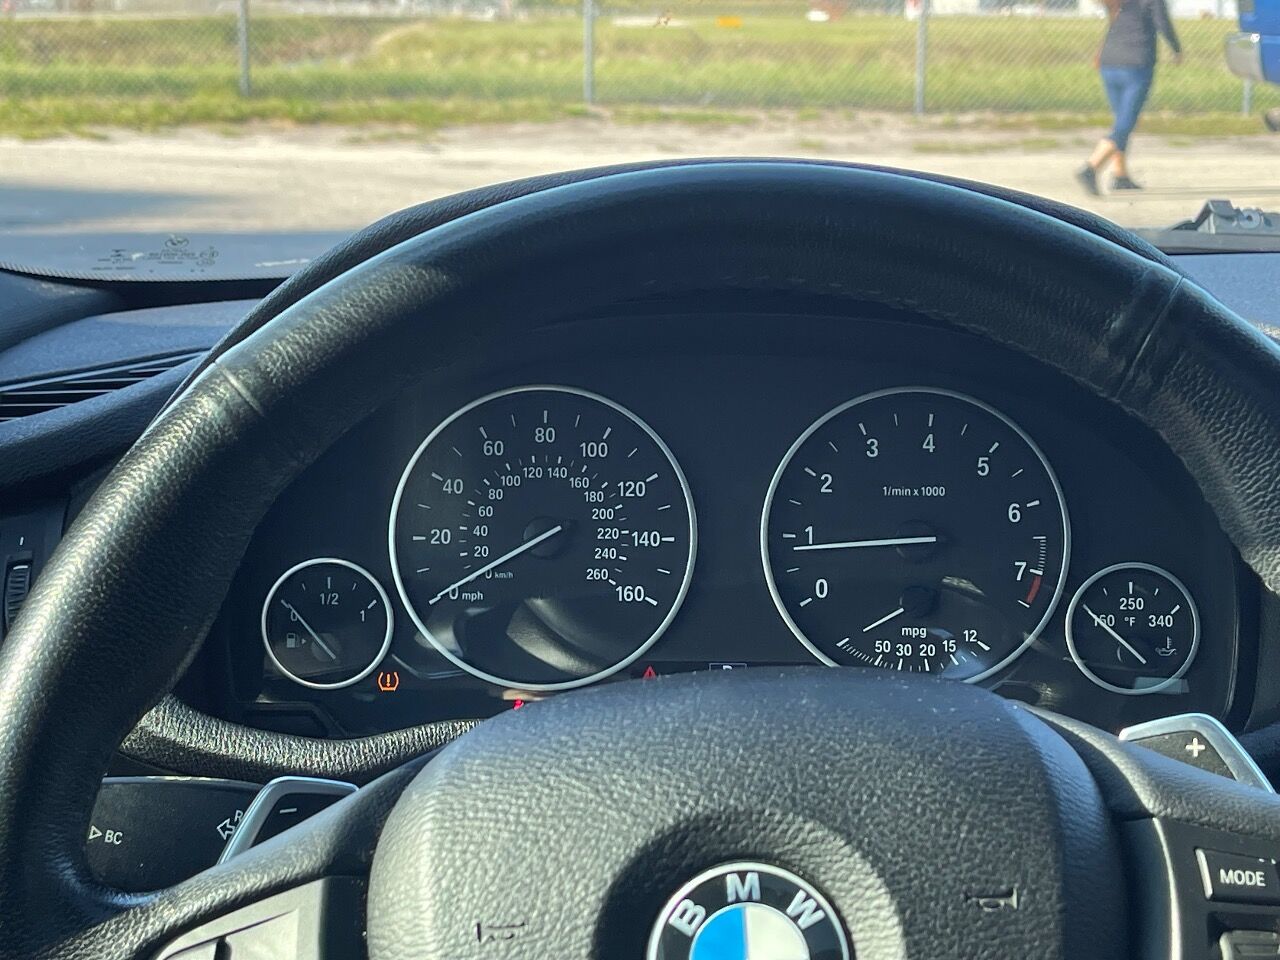 2018 BMW X4 SUV / Crossover - $24,900